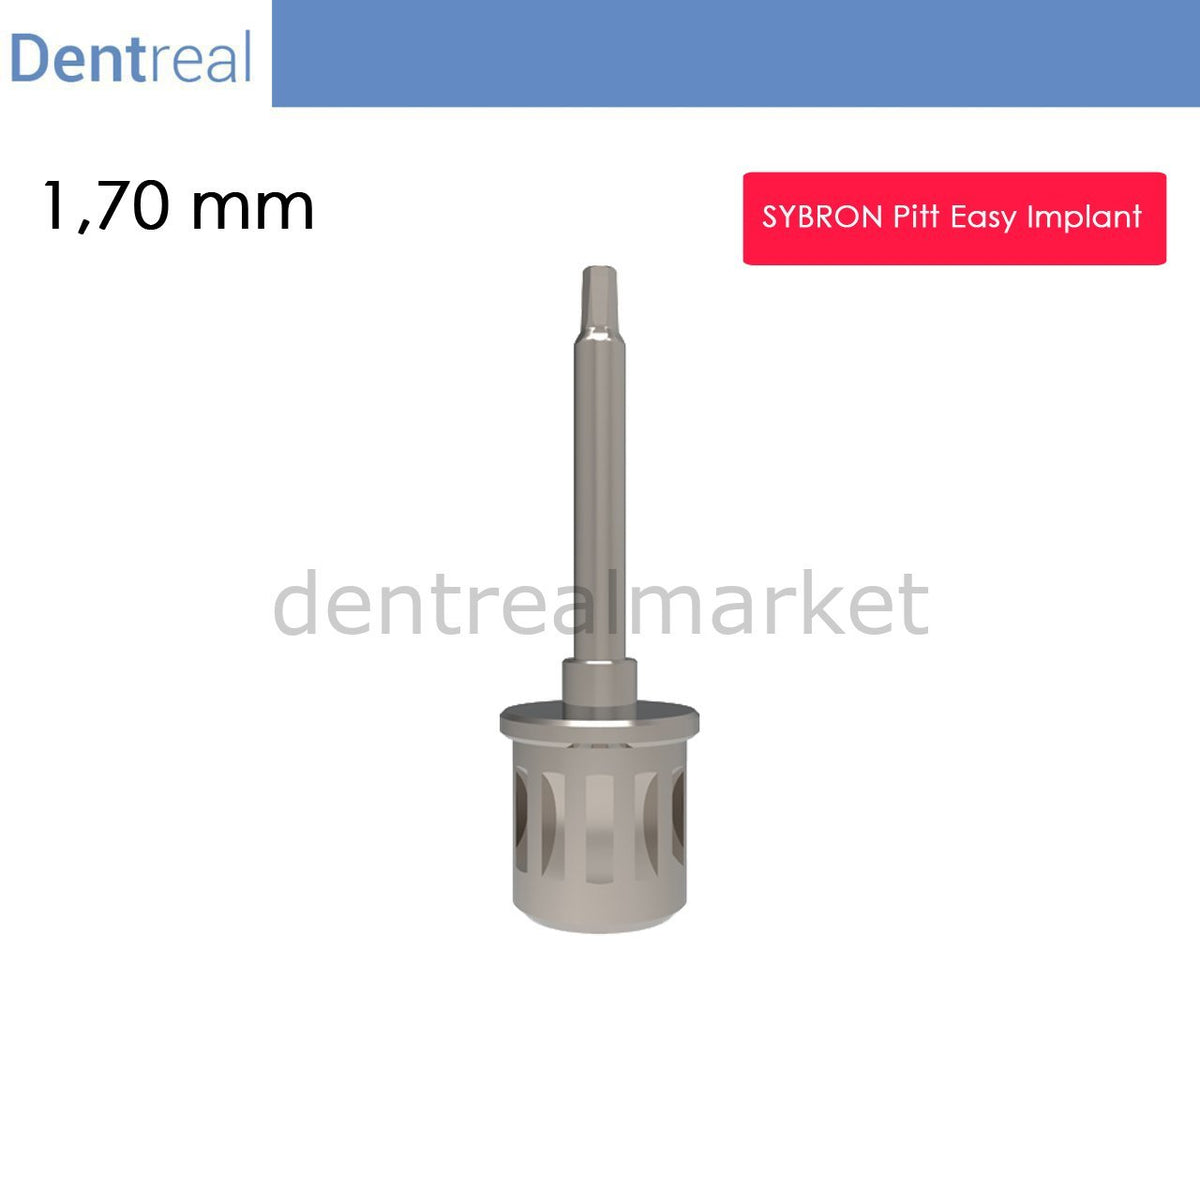 DentrealStore - Dentreal Screwdriver for Sybron Pitt Easy Implant - 1,70 mm Hex Driver